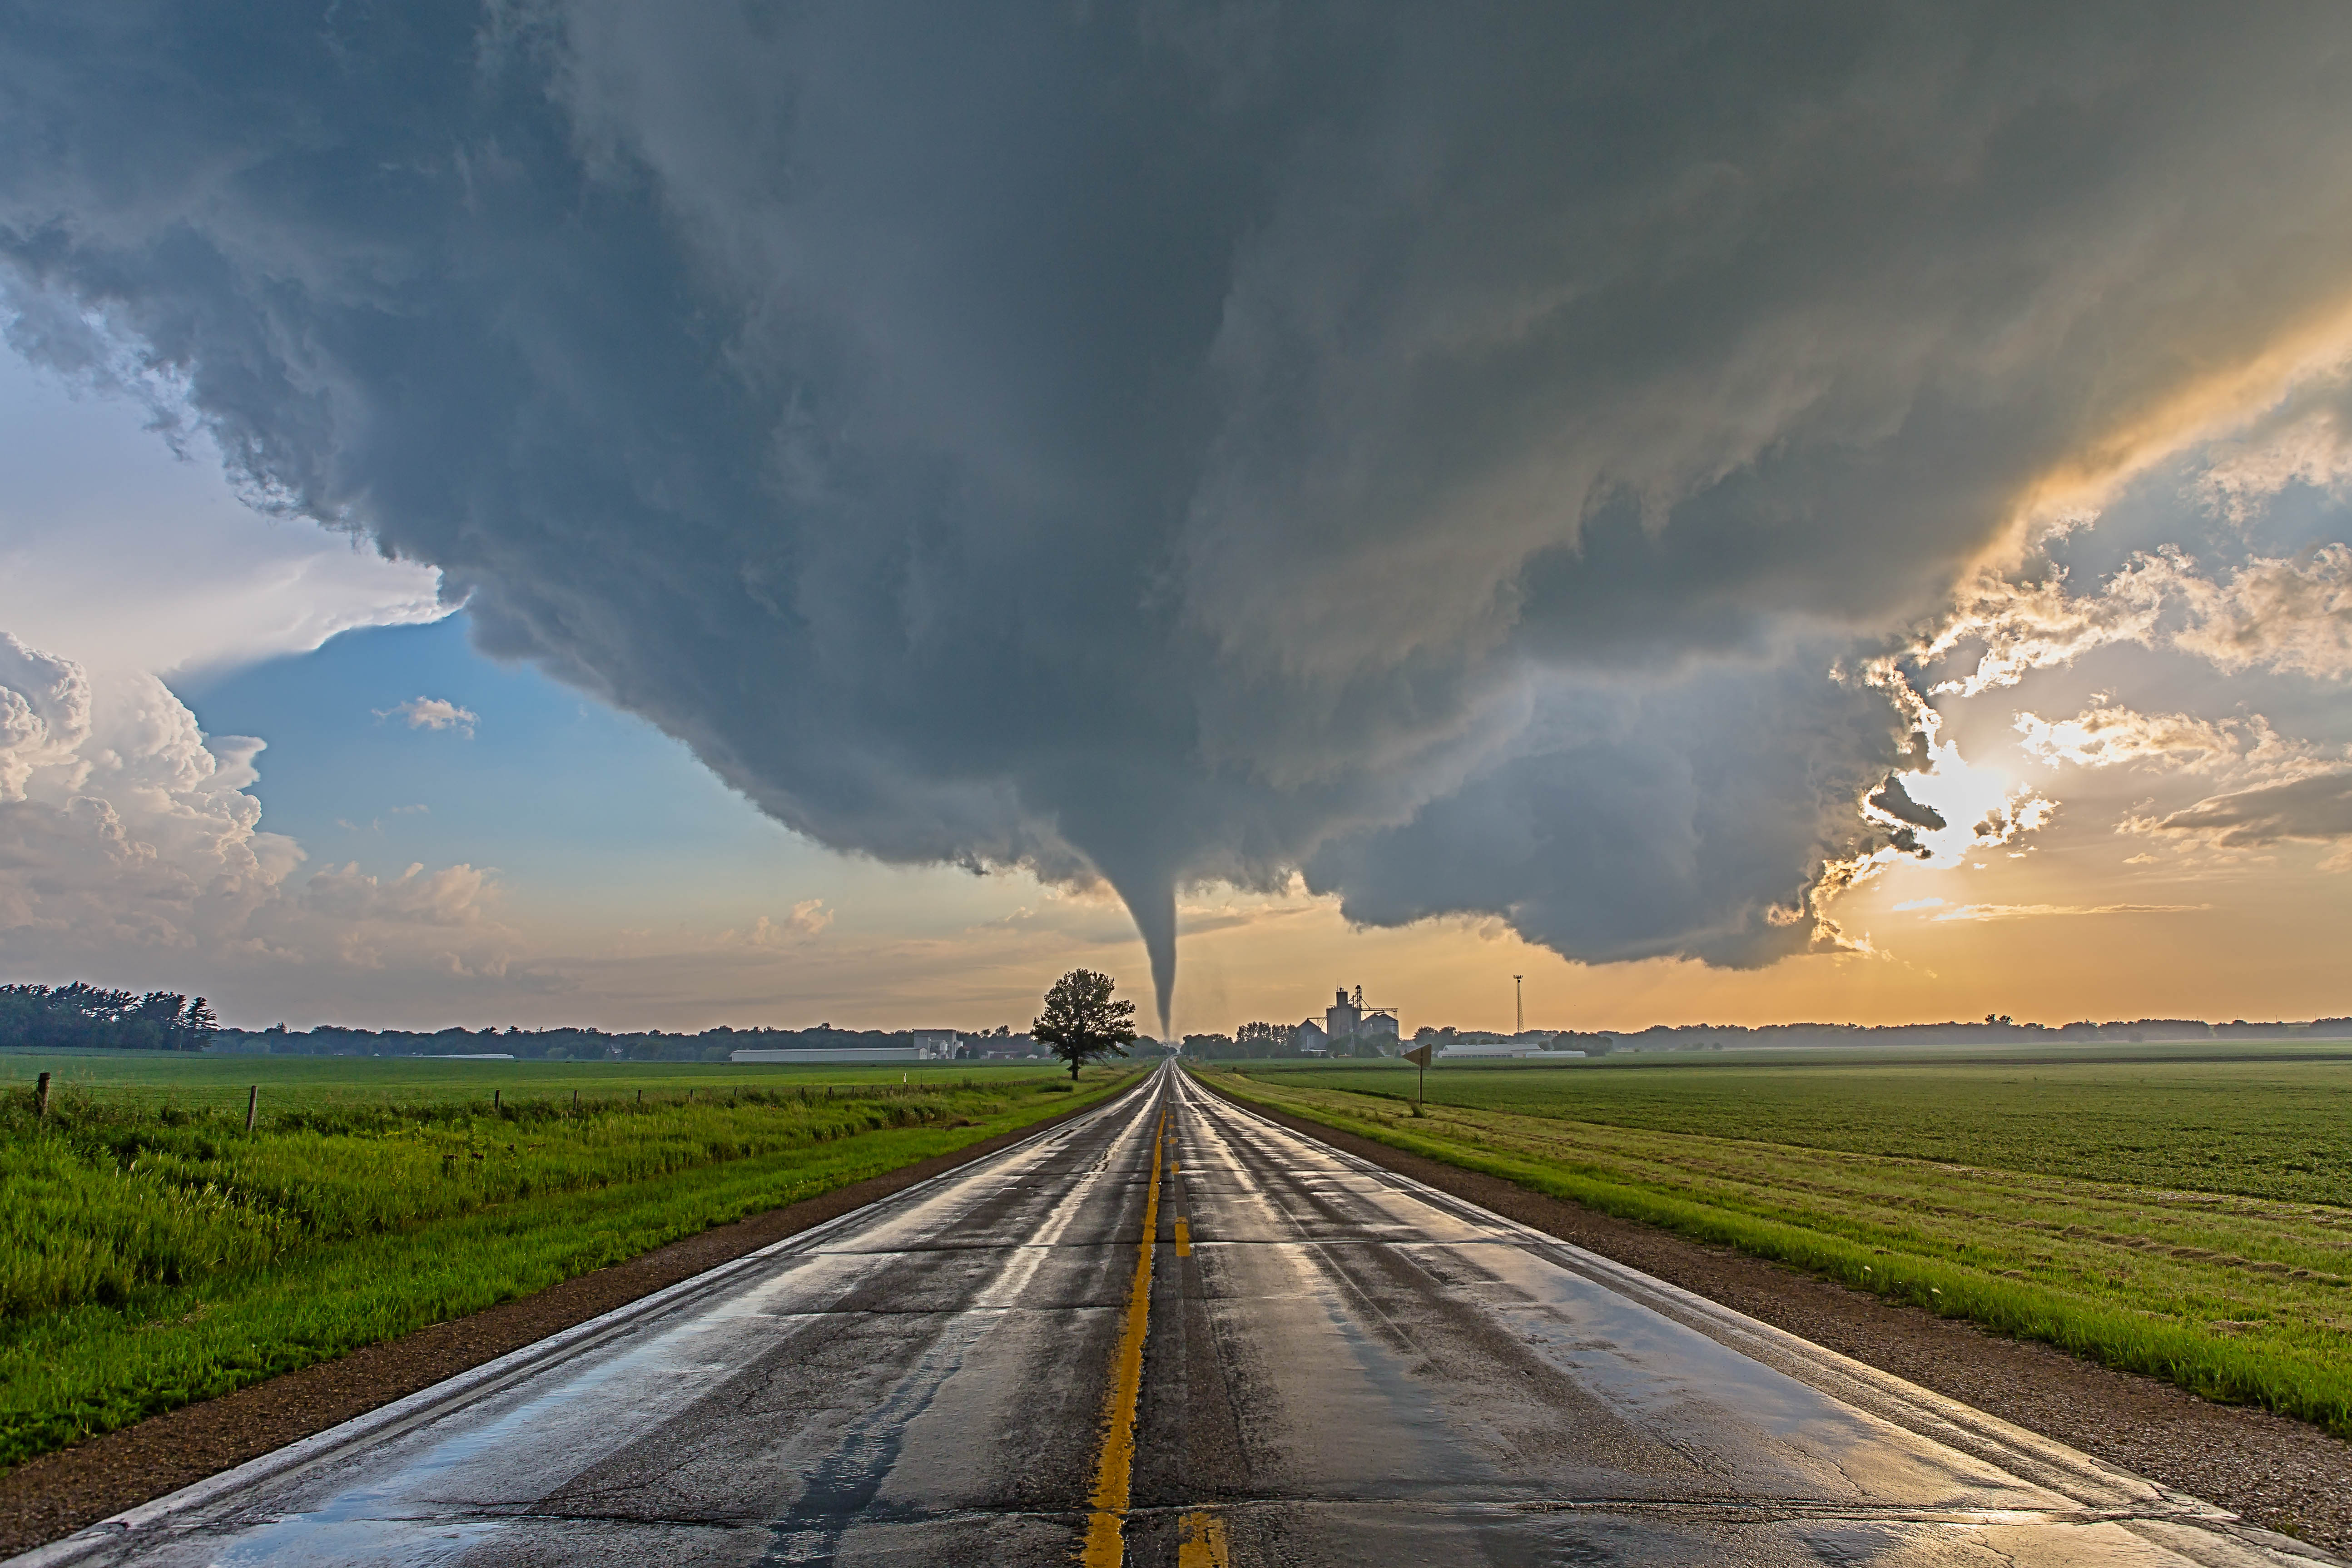 Tornado Image by Brad Goddard